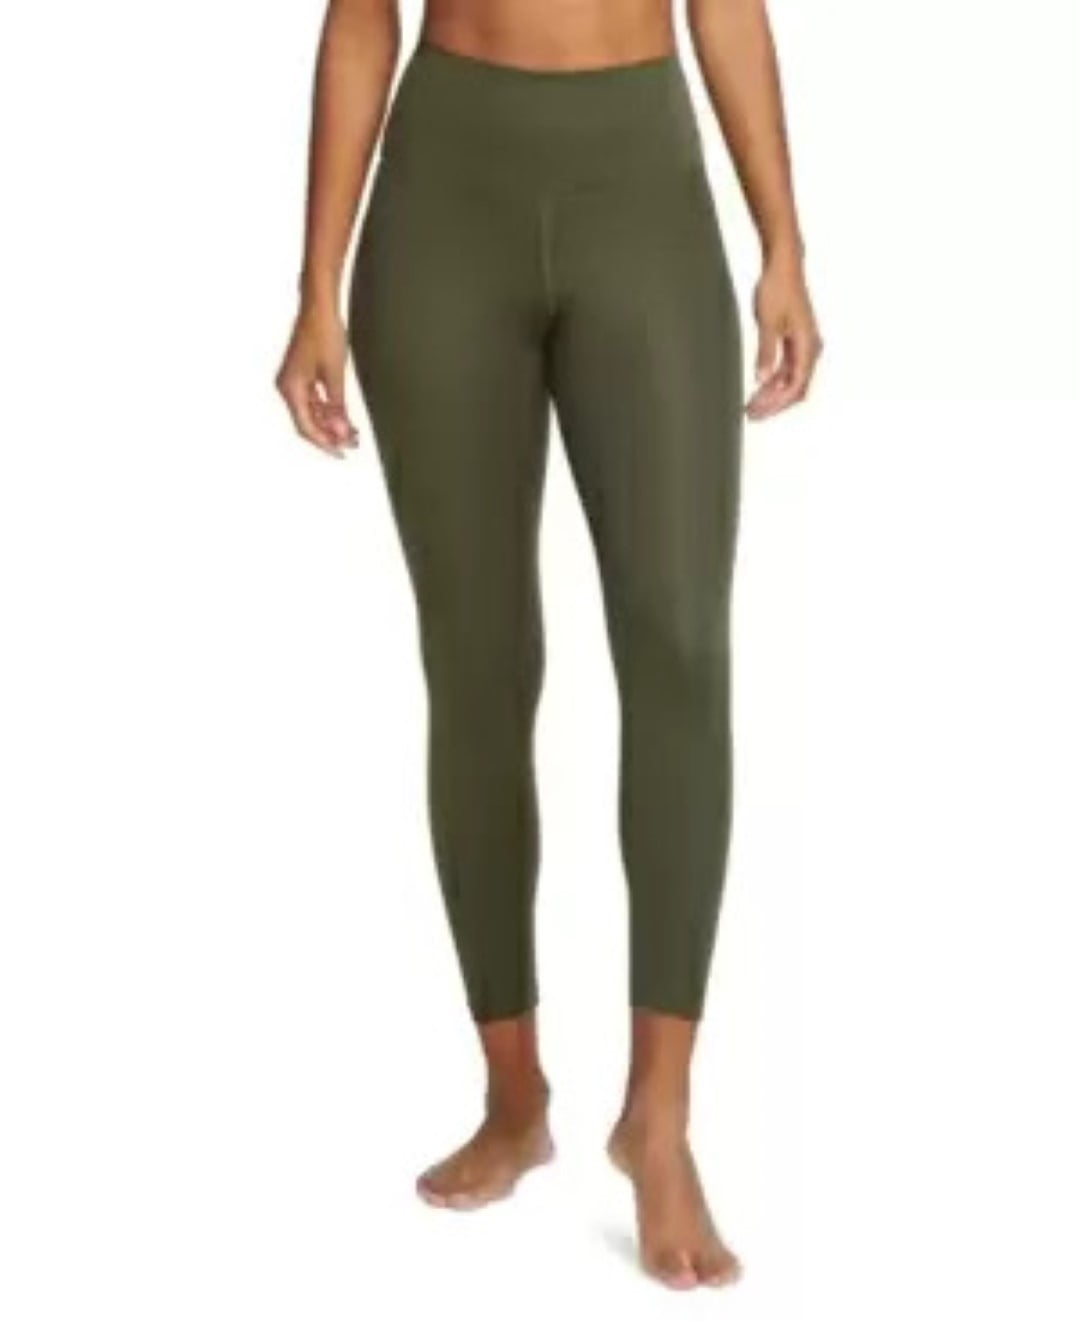 Nike Women's Yoga 7/8 Length Leggings, Green, Medium 